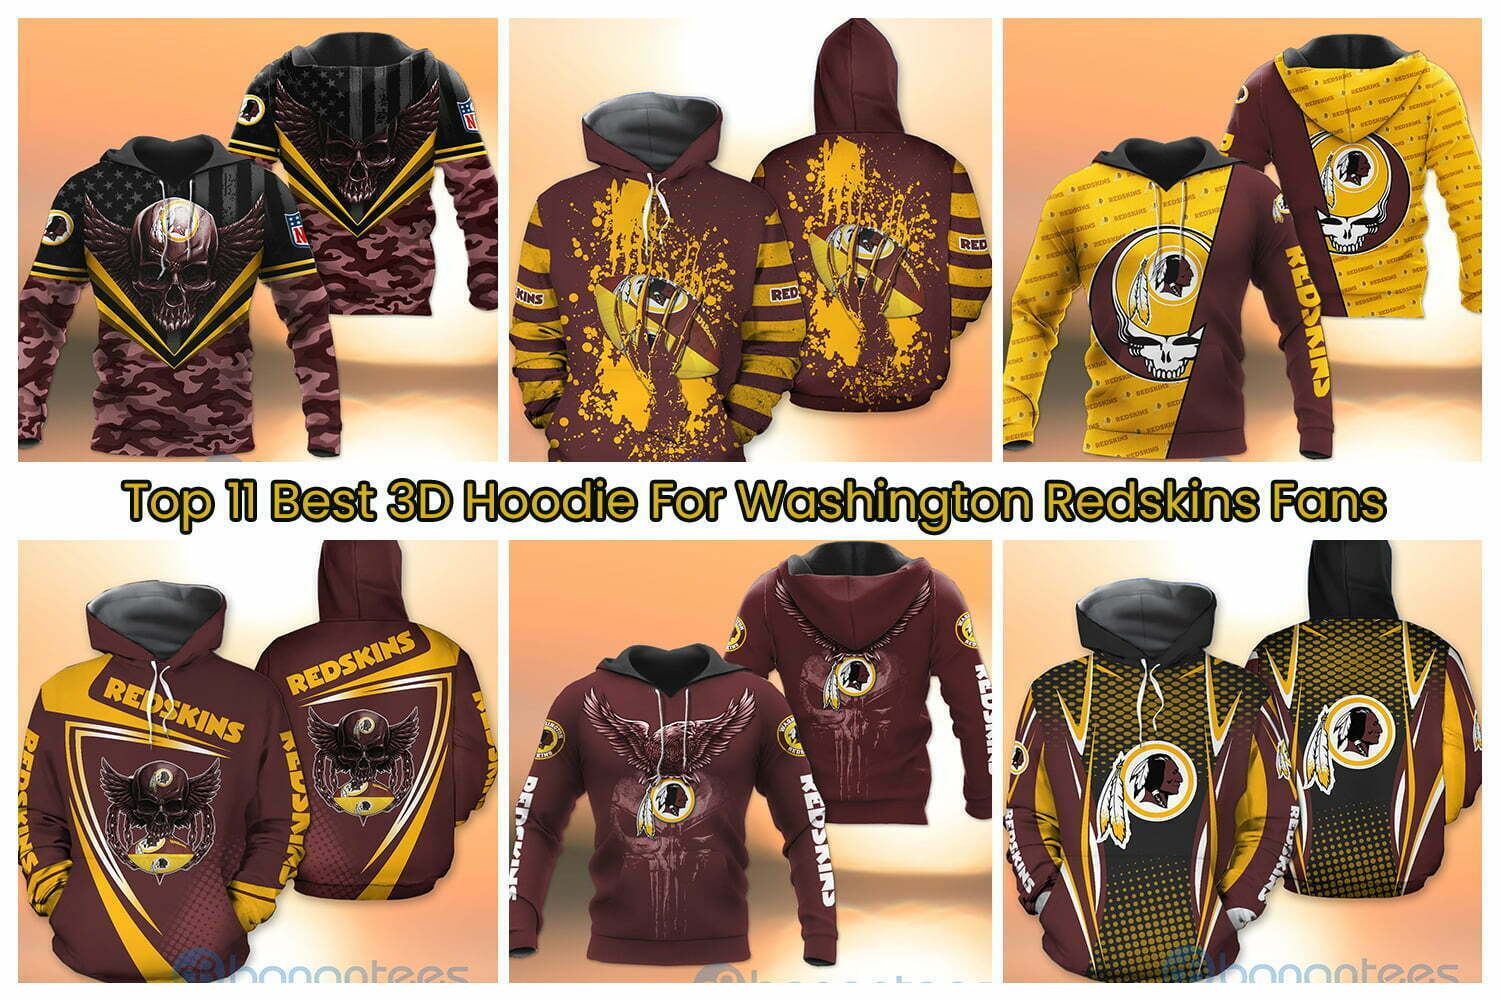 Top 11 Best 3D Hoodie For Washington Redskins Fans